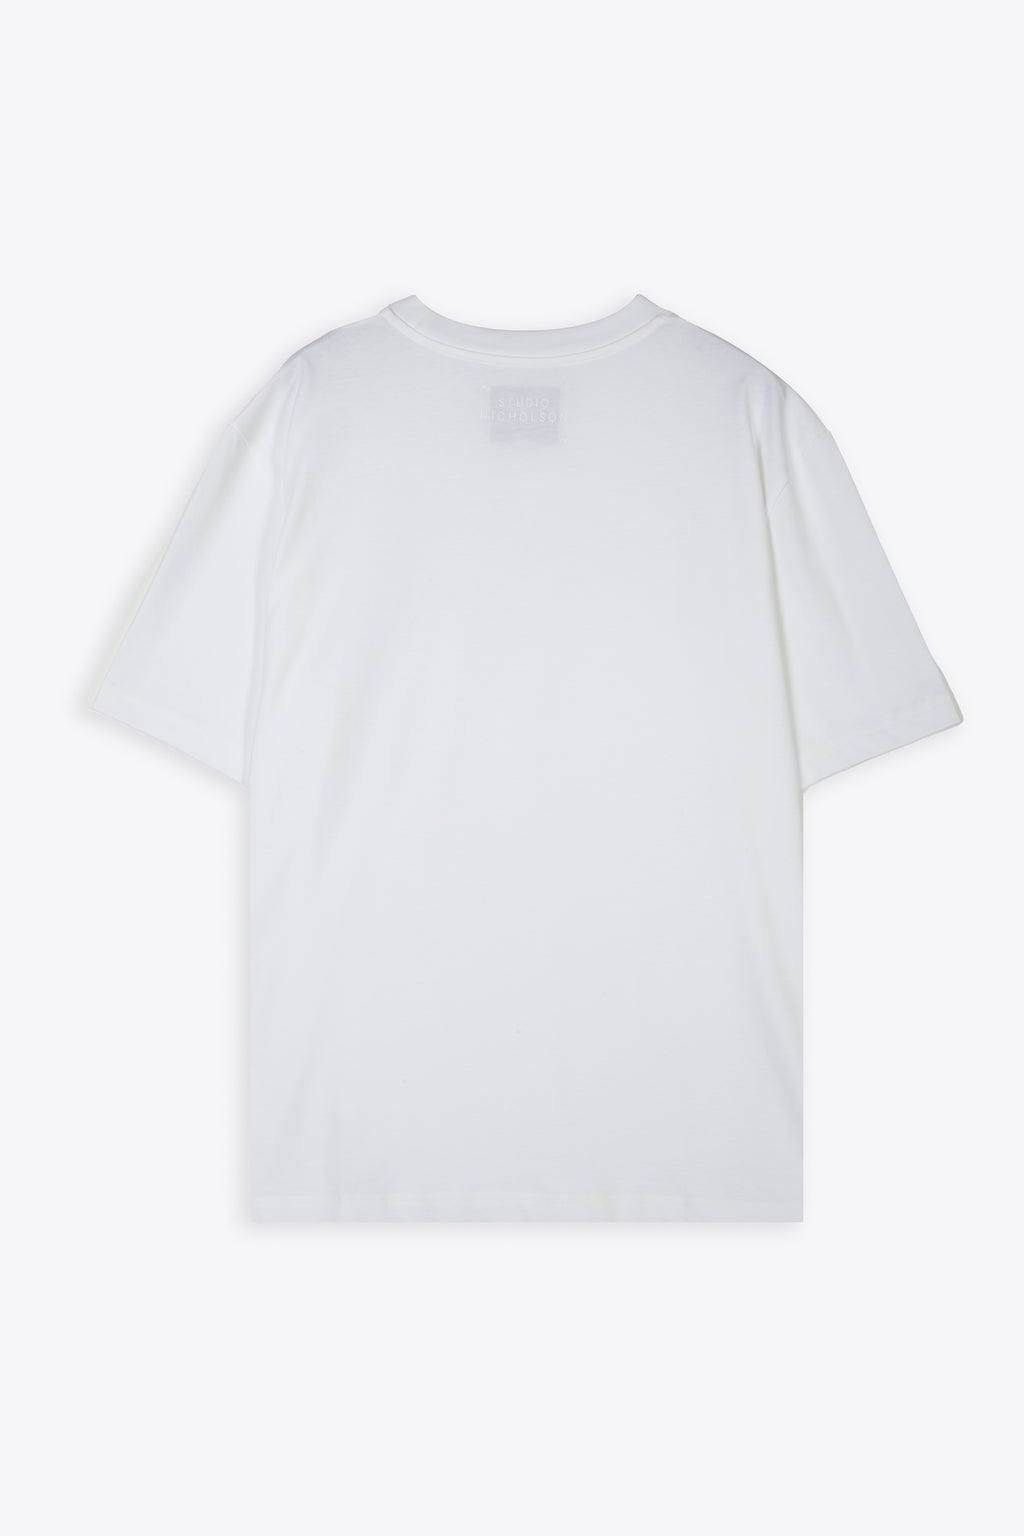 alt-image__White-cotton-boxy-fit-t-shirt---Lay